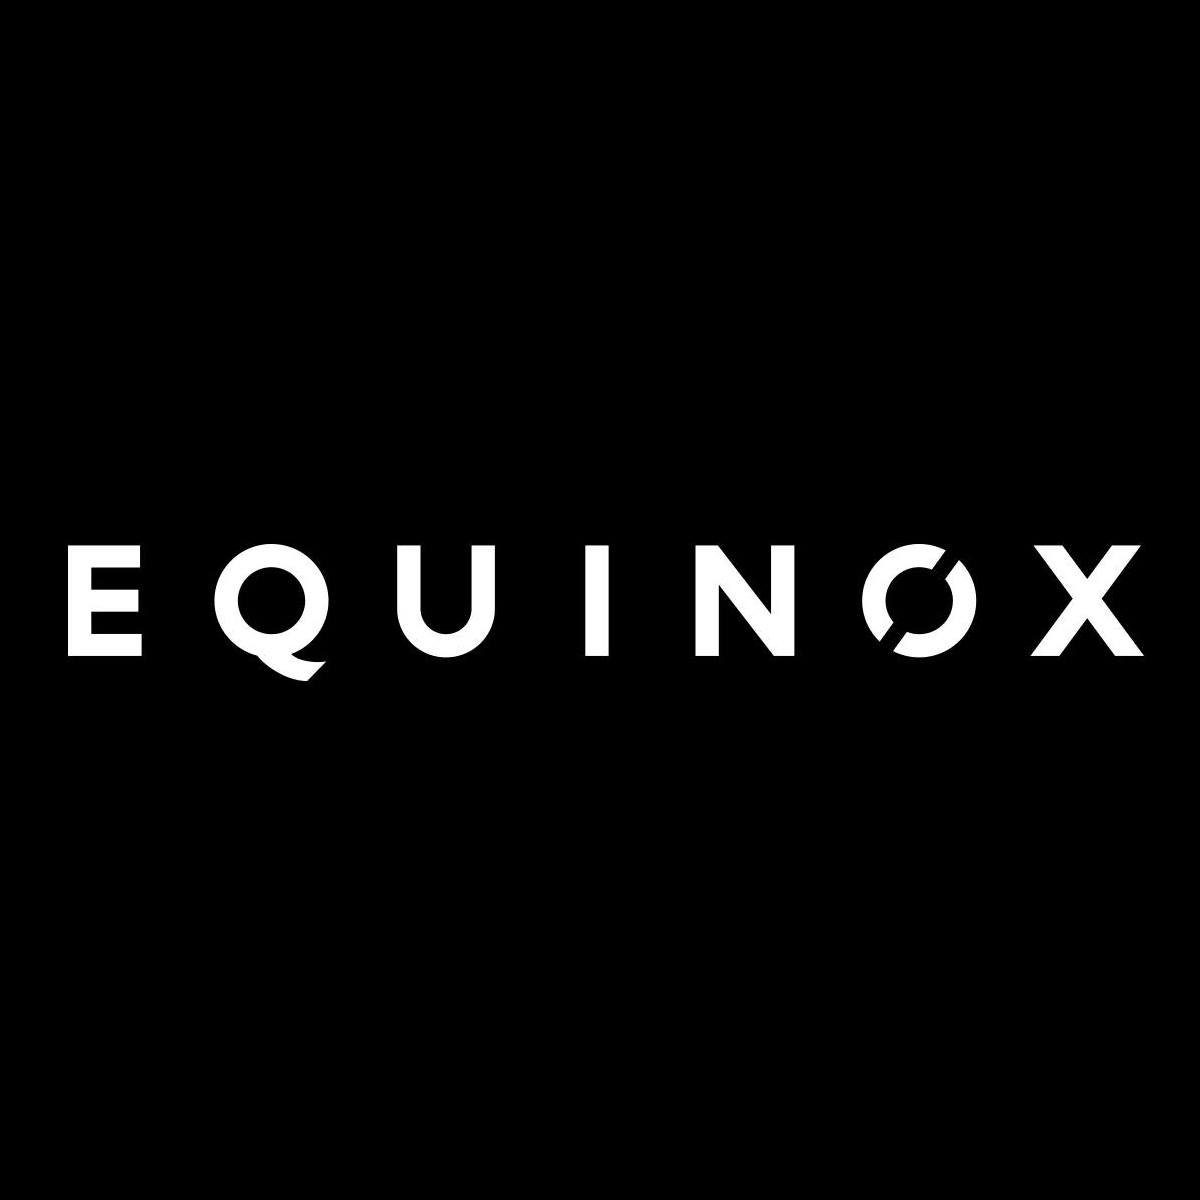 EQUINOX fb logo - Bay Area Legal Aid